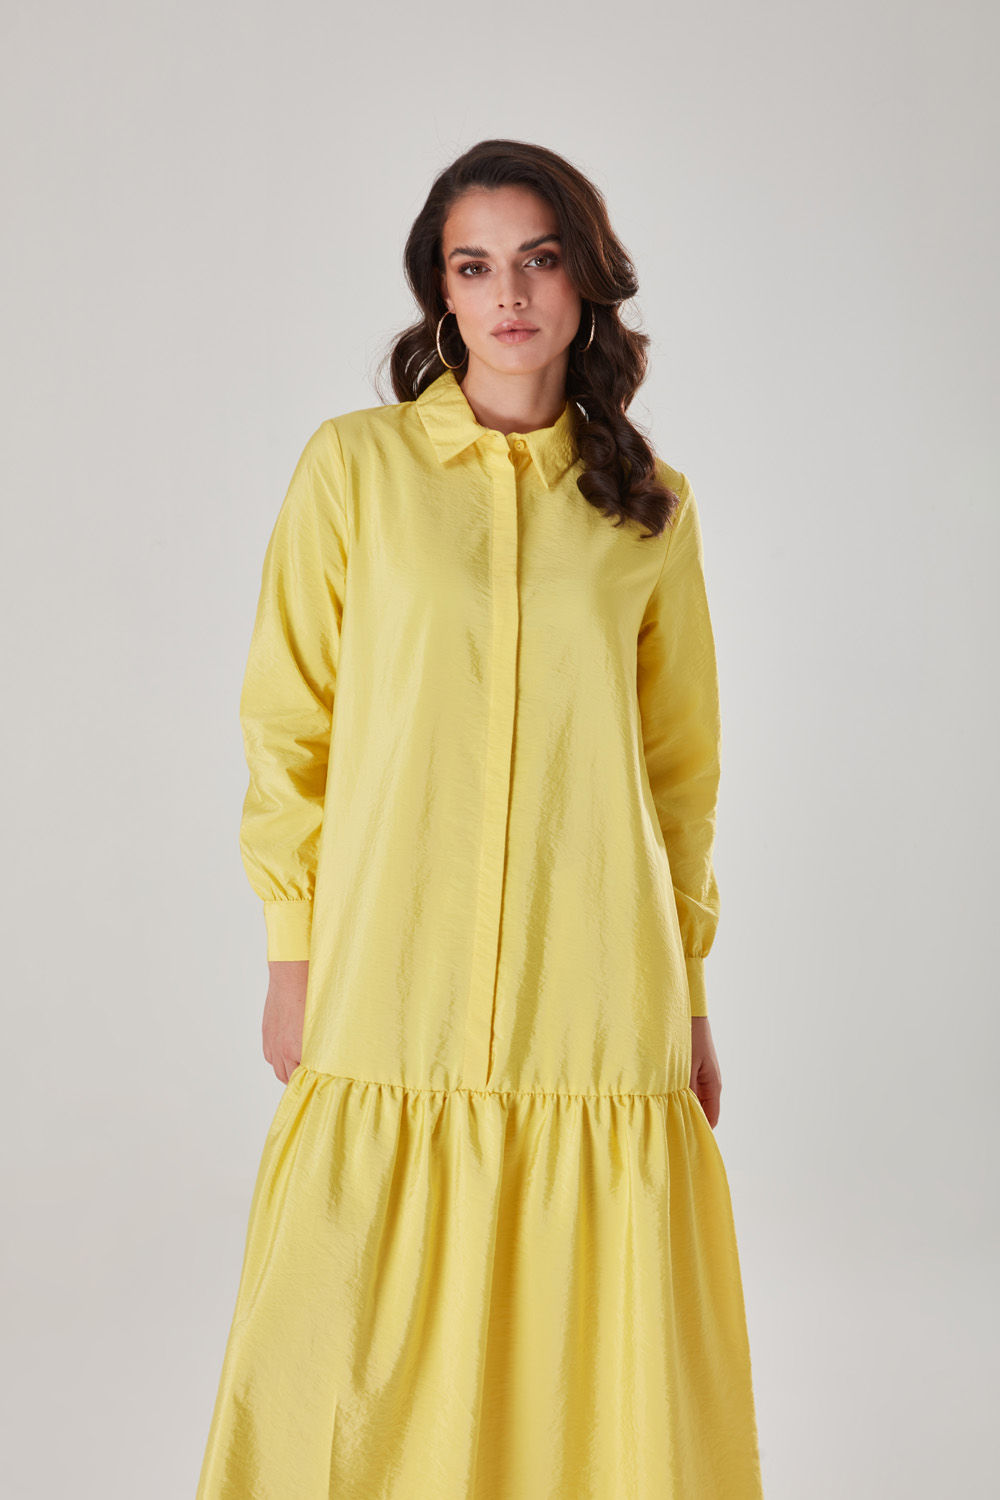 Shirt Collar Detailed Parachute Yellow Dress